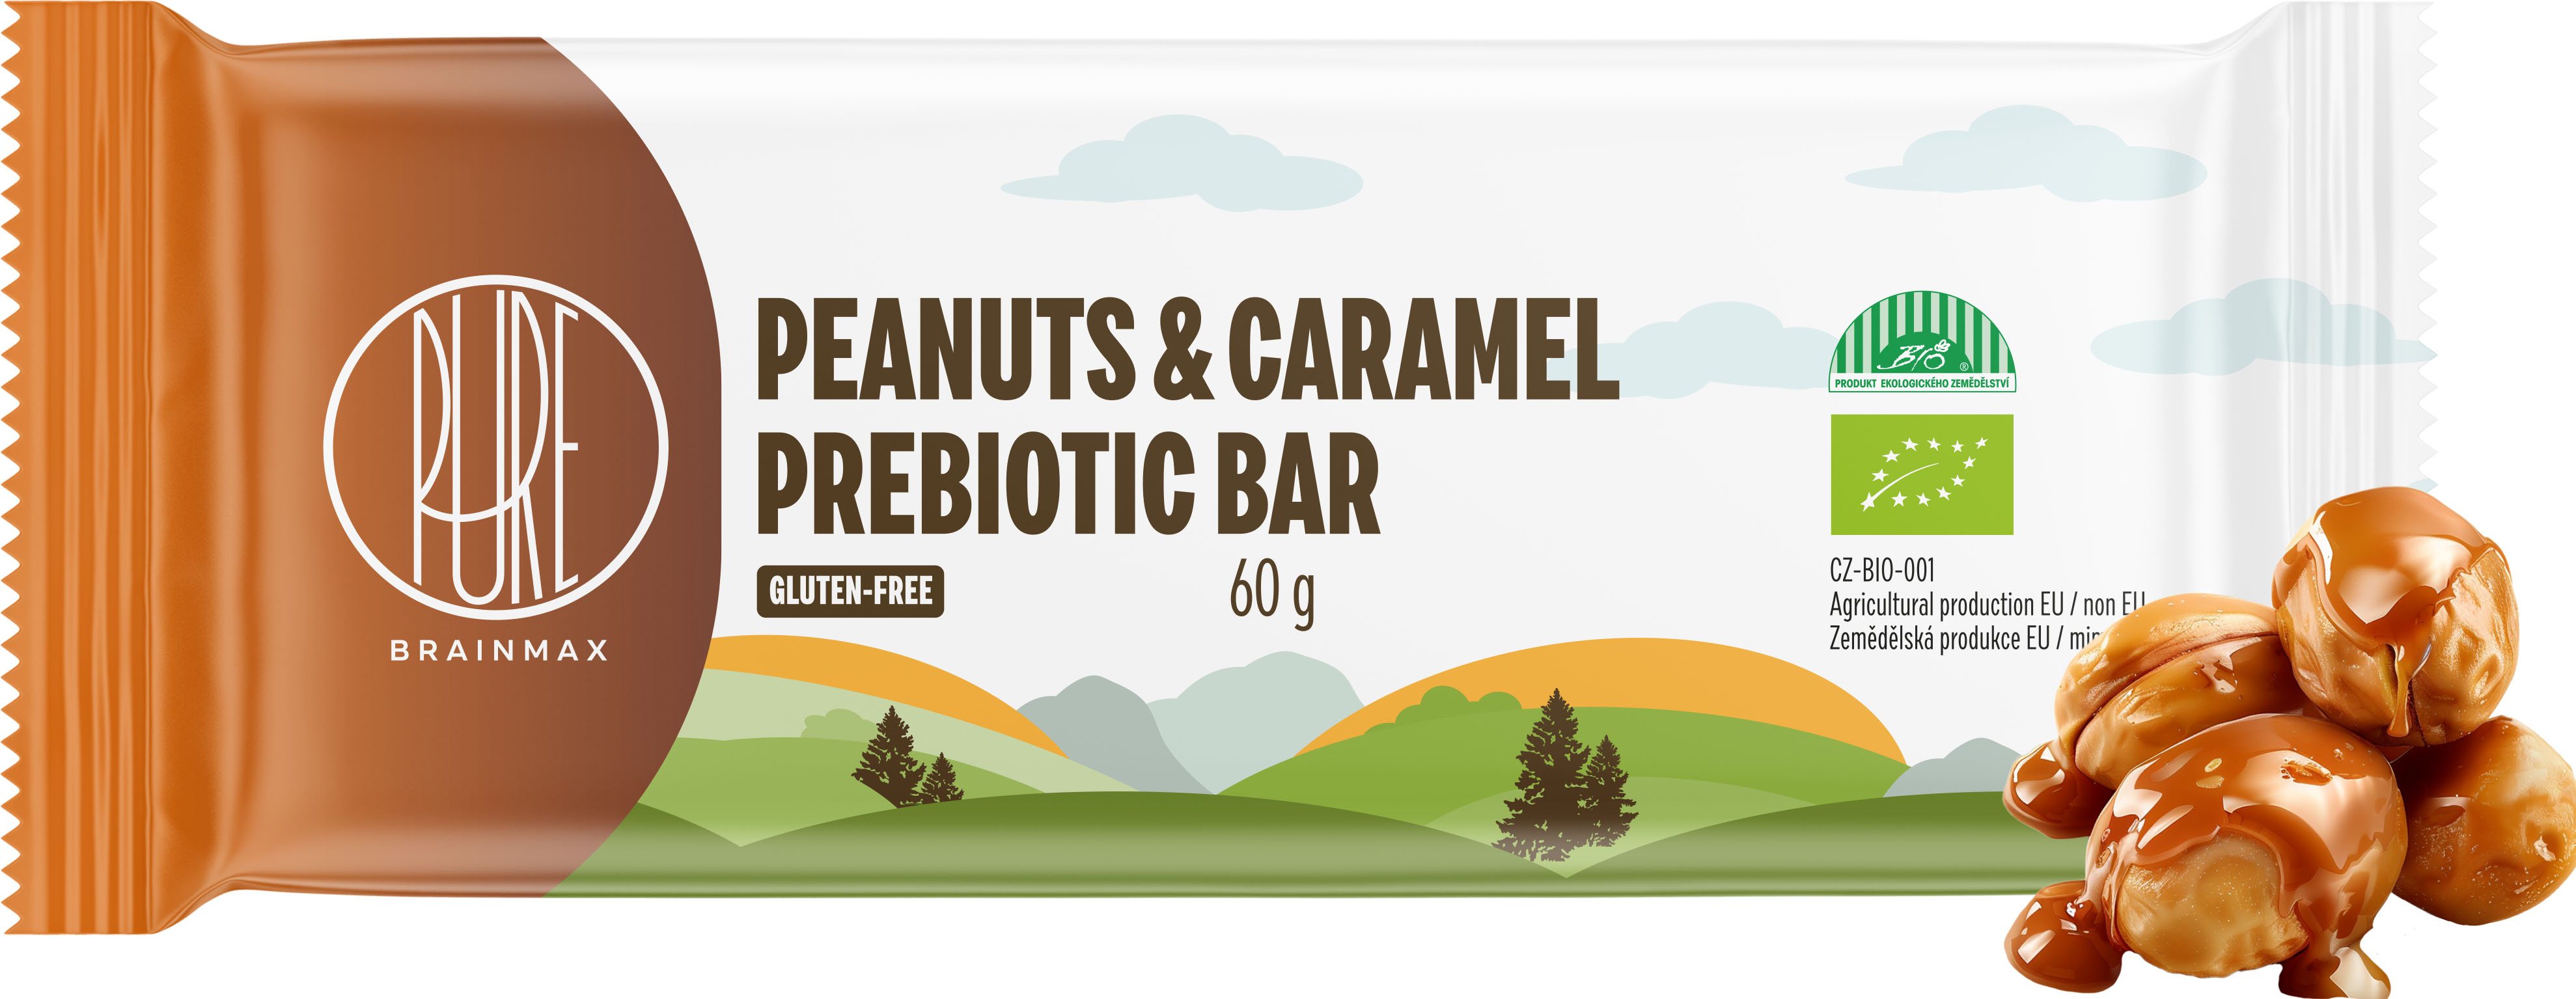 BrainMax Pure Peanuts & Caramel Prebiotic Bar, prebiotická tyčinka, arašídy a karamel, BIO, 60 g *CZ-BIO-001 certifikát/ tyčinka s vlákninou, arašídy s příchutí karamelu